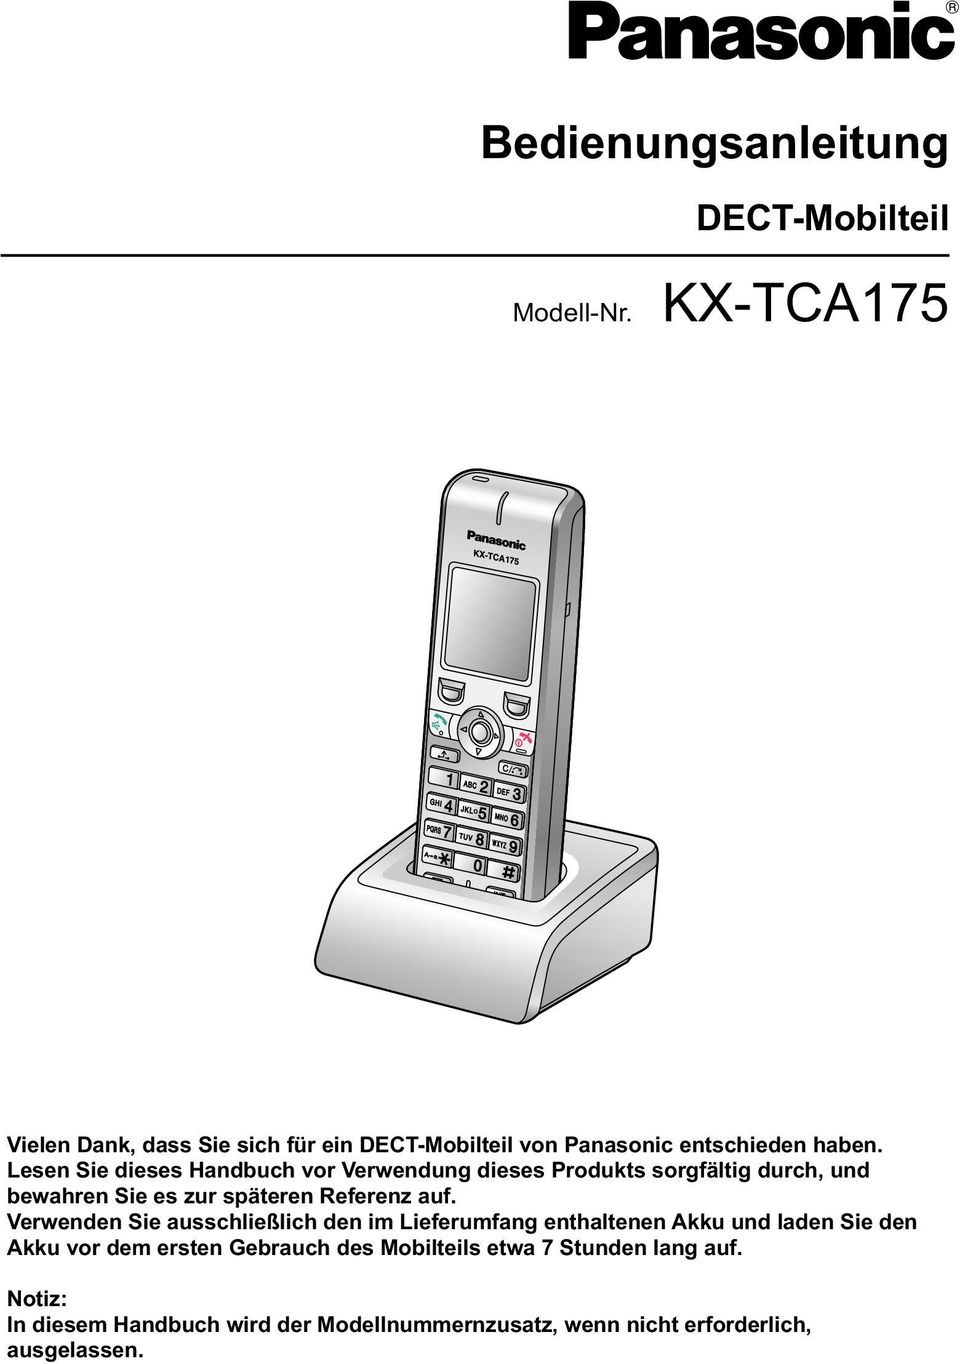 Panasonic KX-TCA175 Mobilteil DECT Telefon Systemtelefon ähnlich TCA275 19% MwSt 